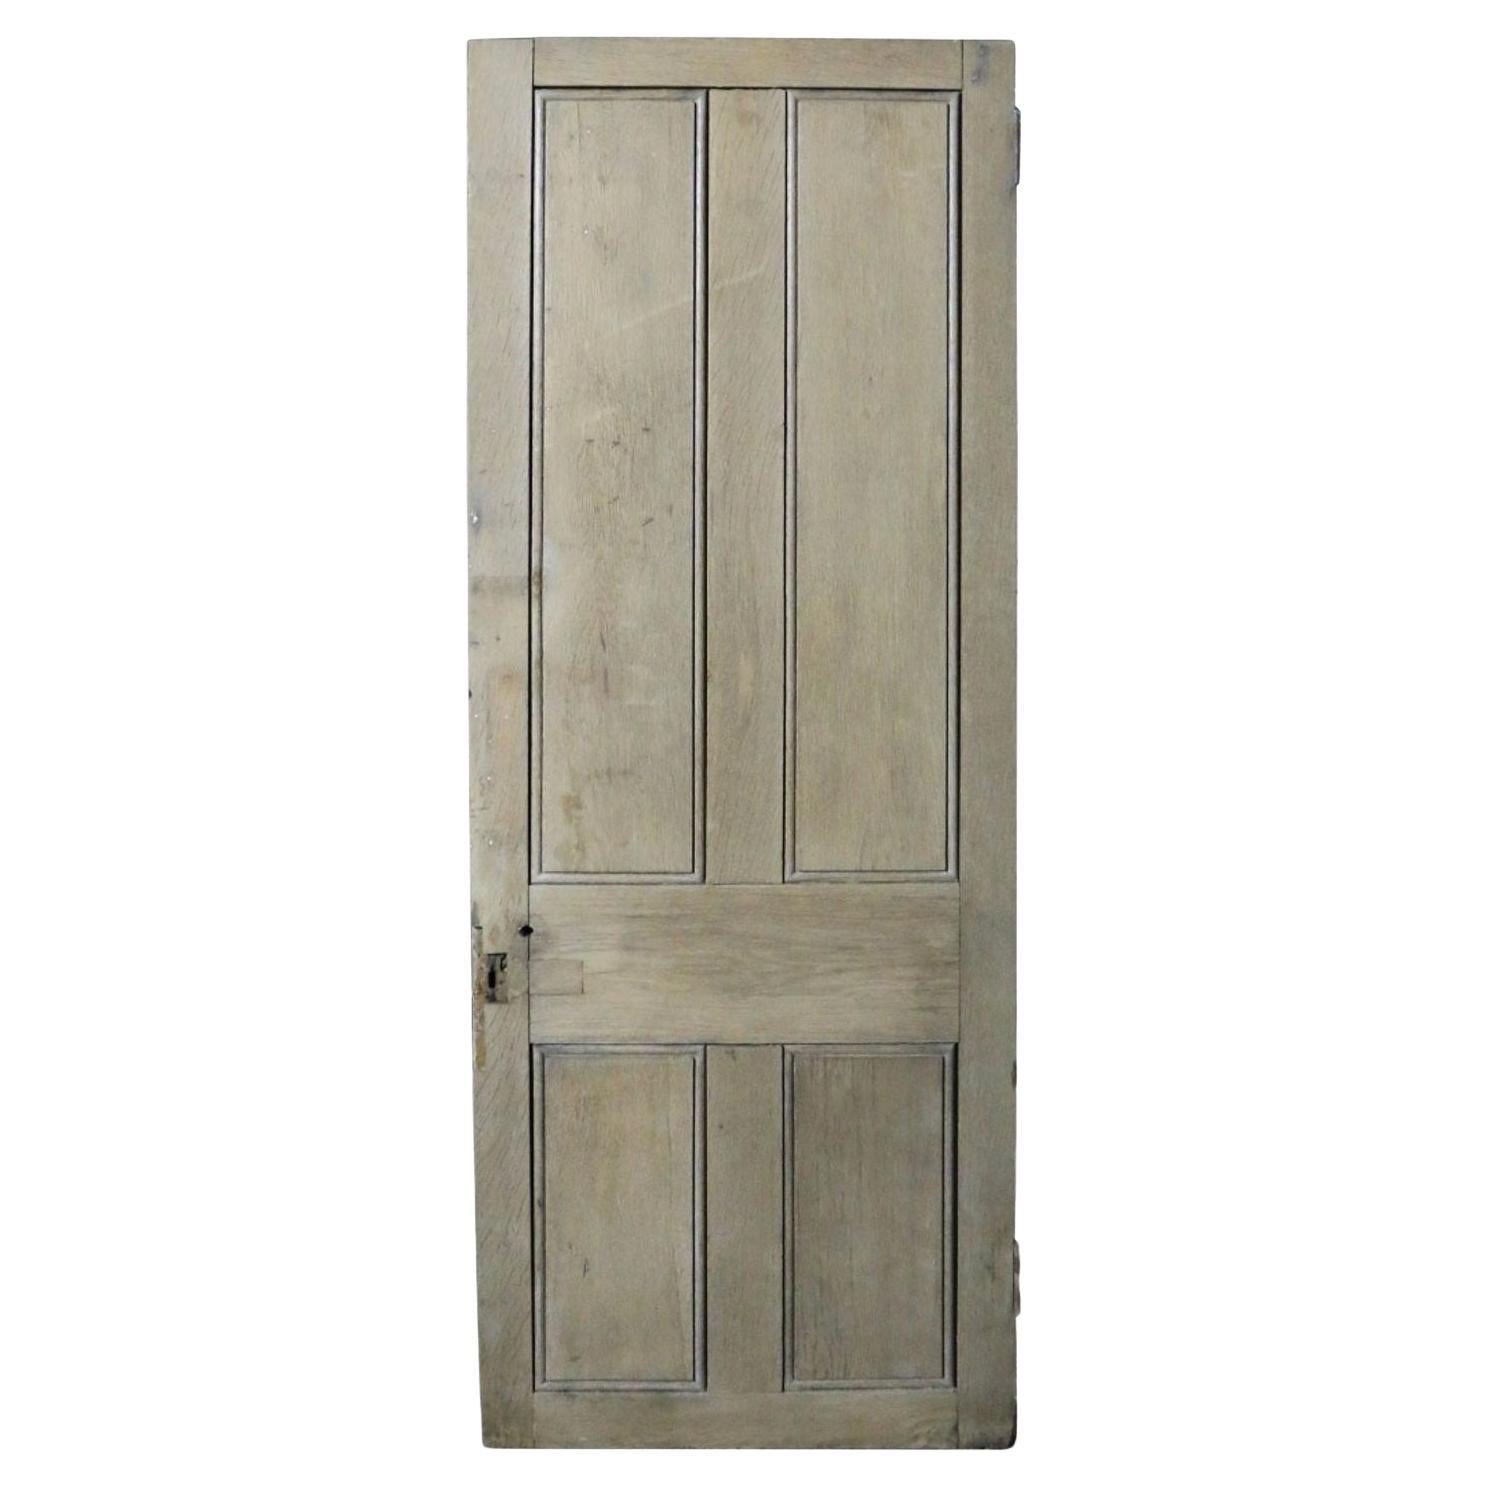 A Reclaimed Oak Four Panel External Door For Sale